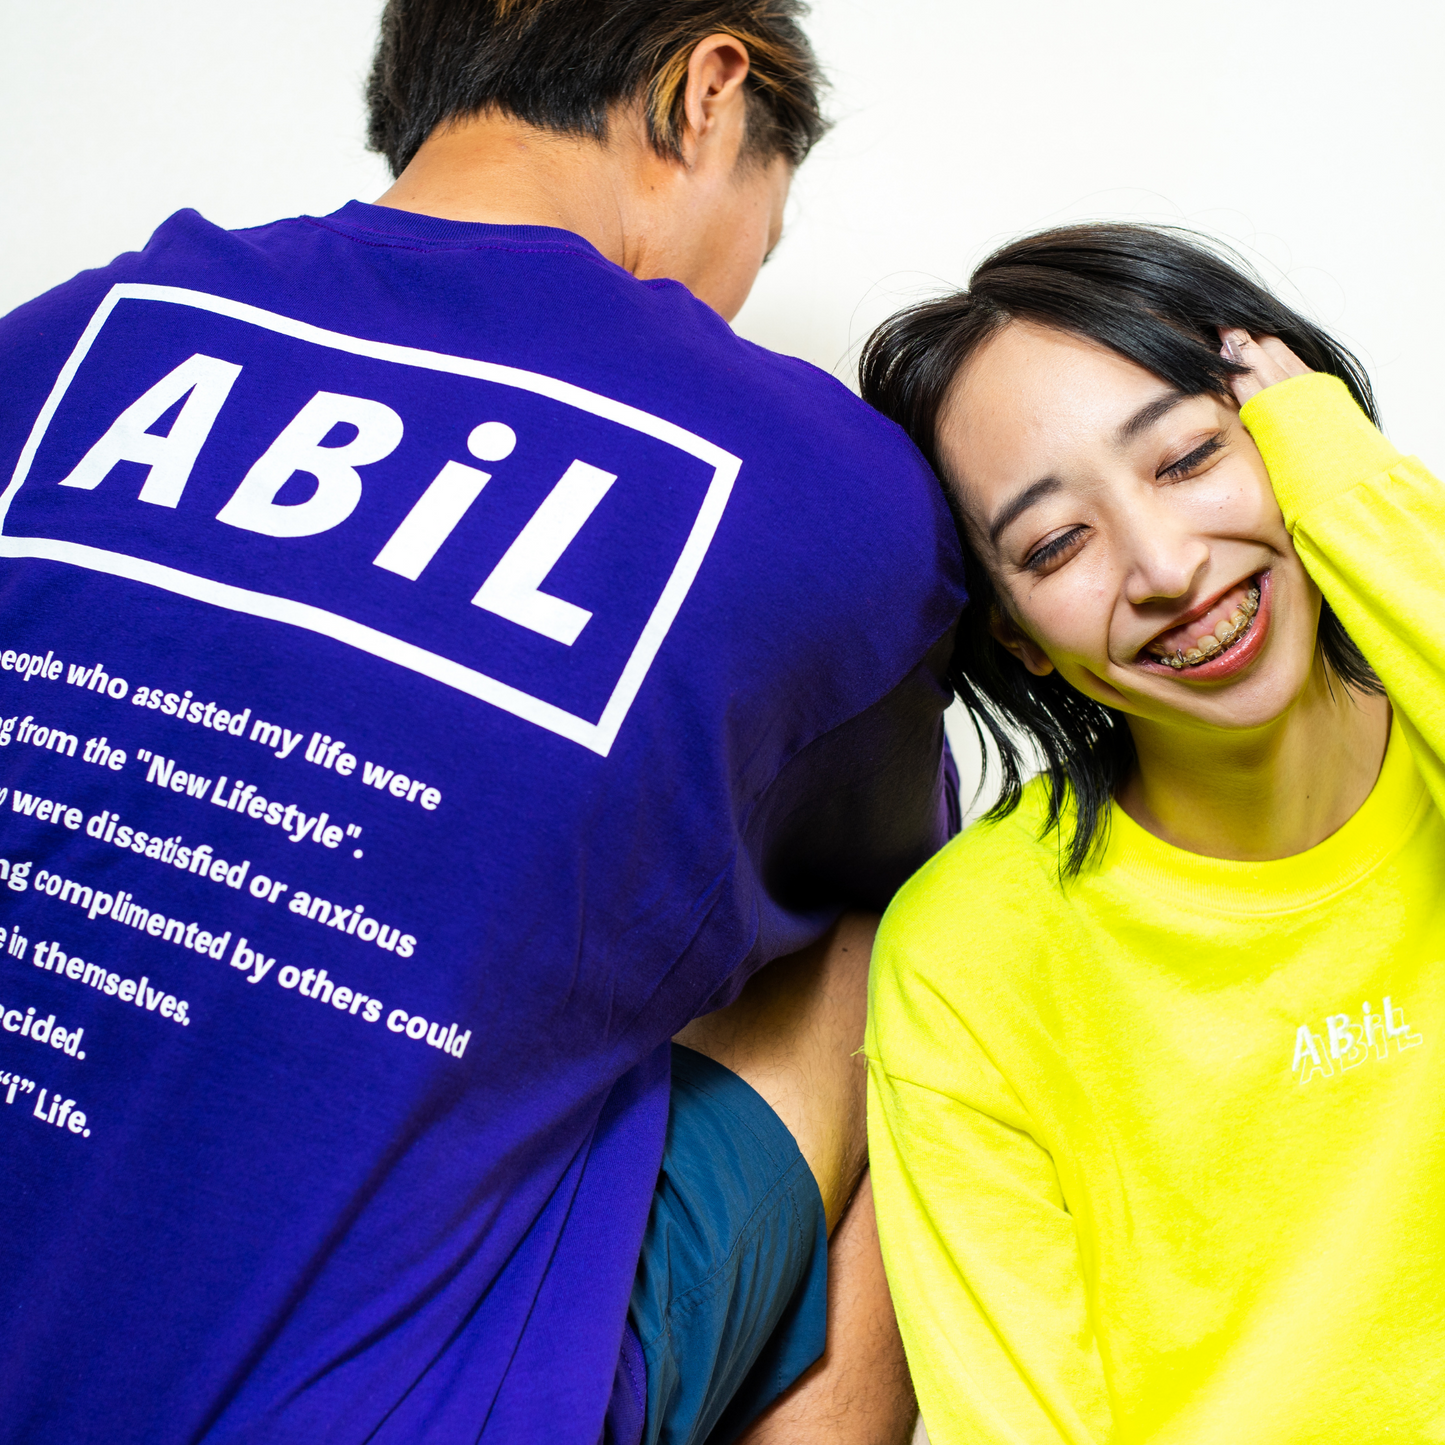 ABiL Logo Long Tees - Purple